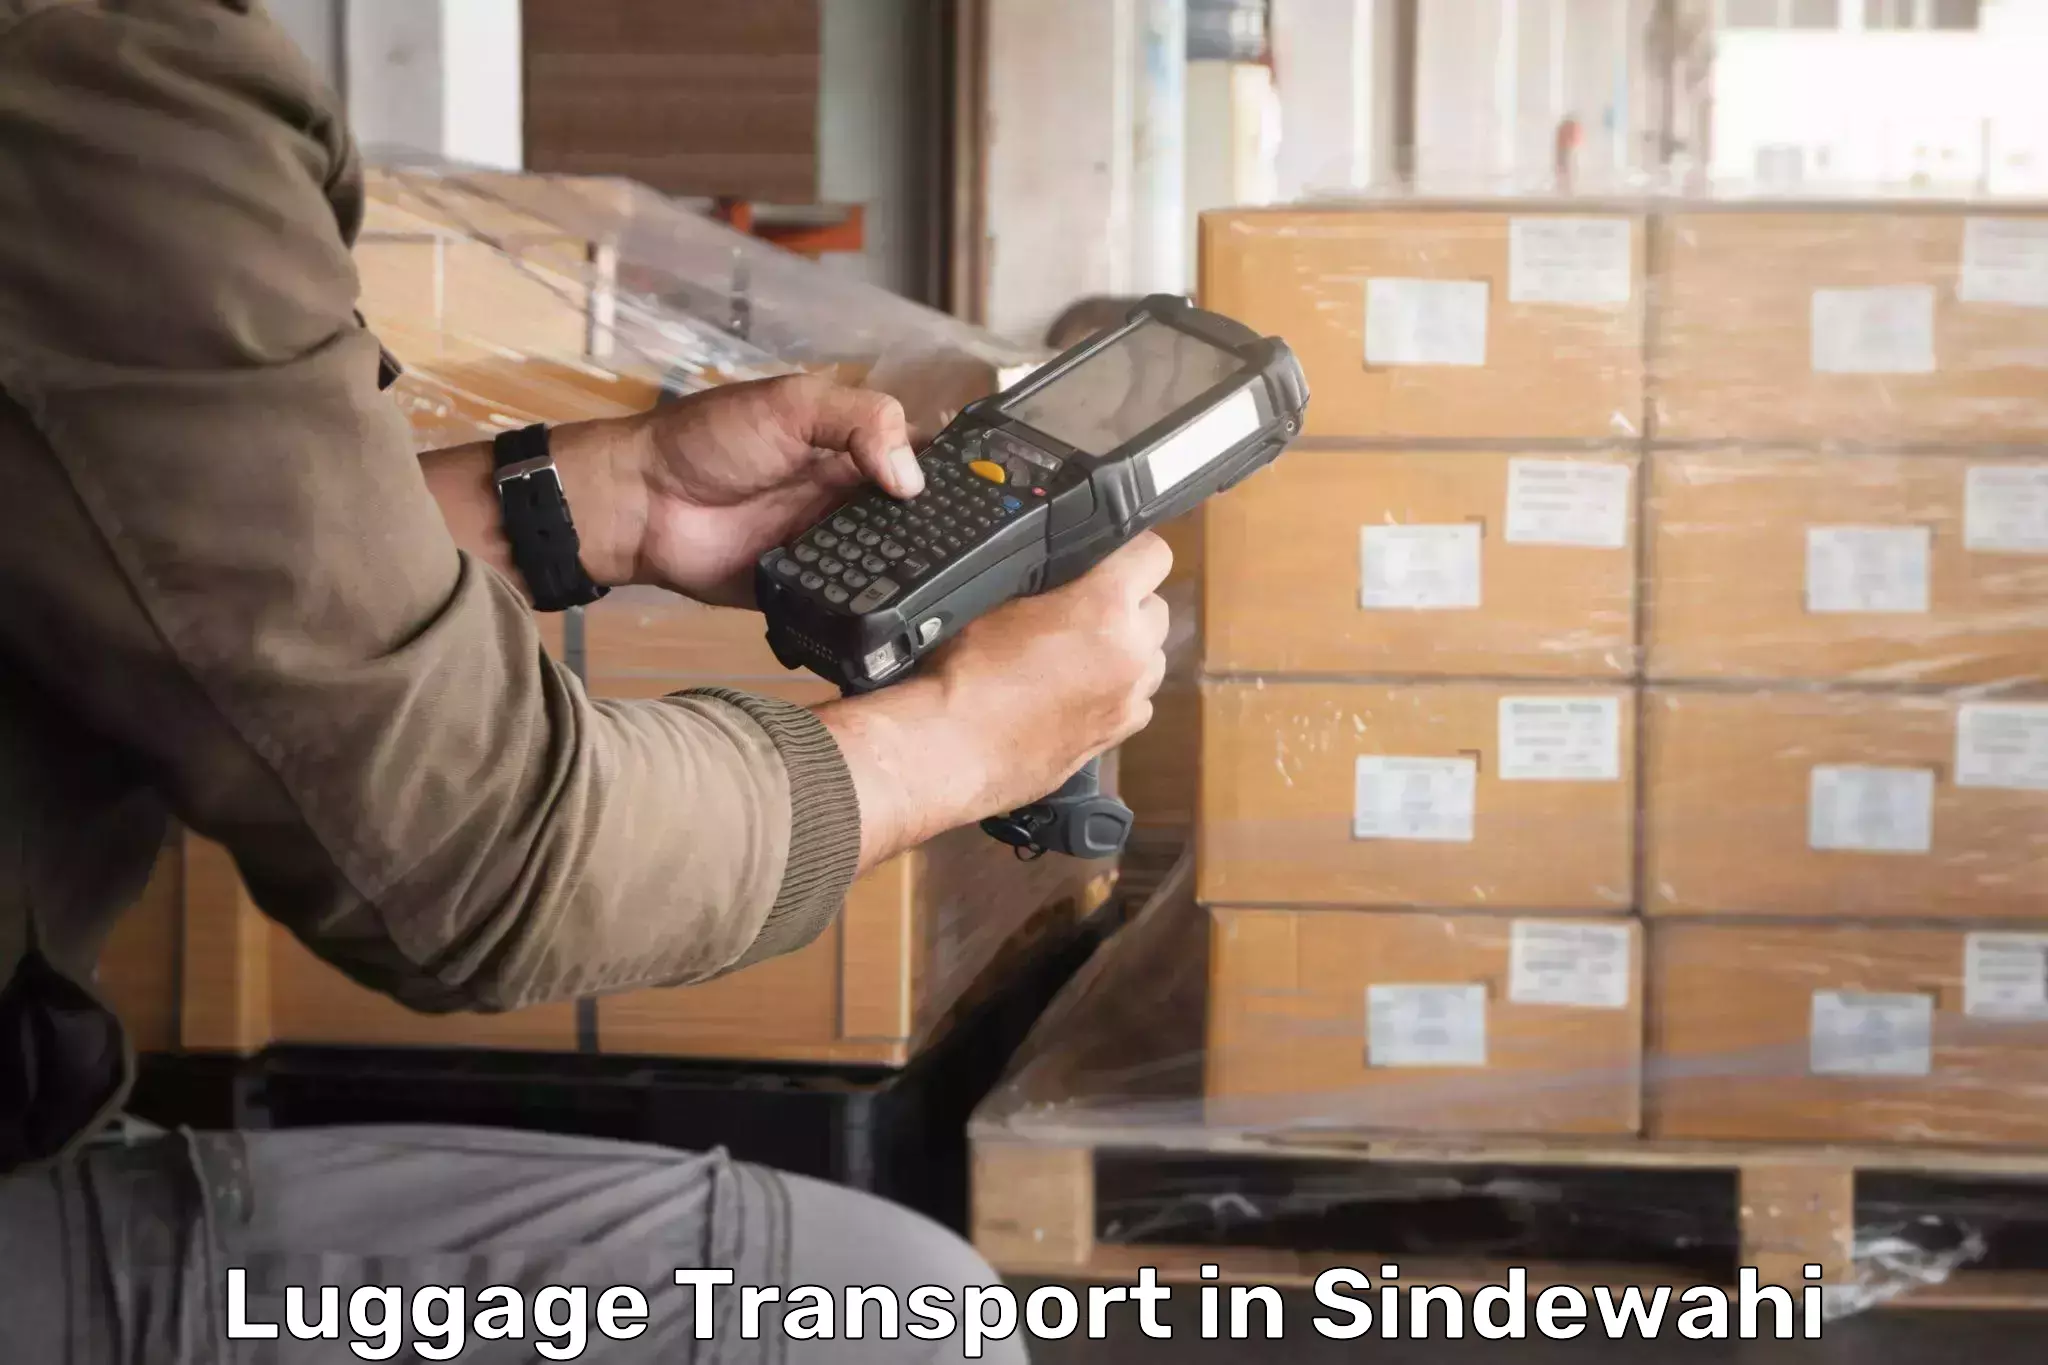 Luggage shipment processing in Sindewahi